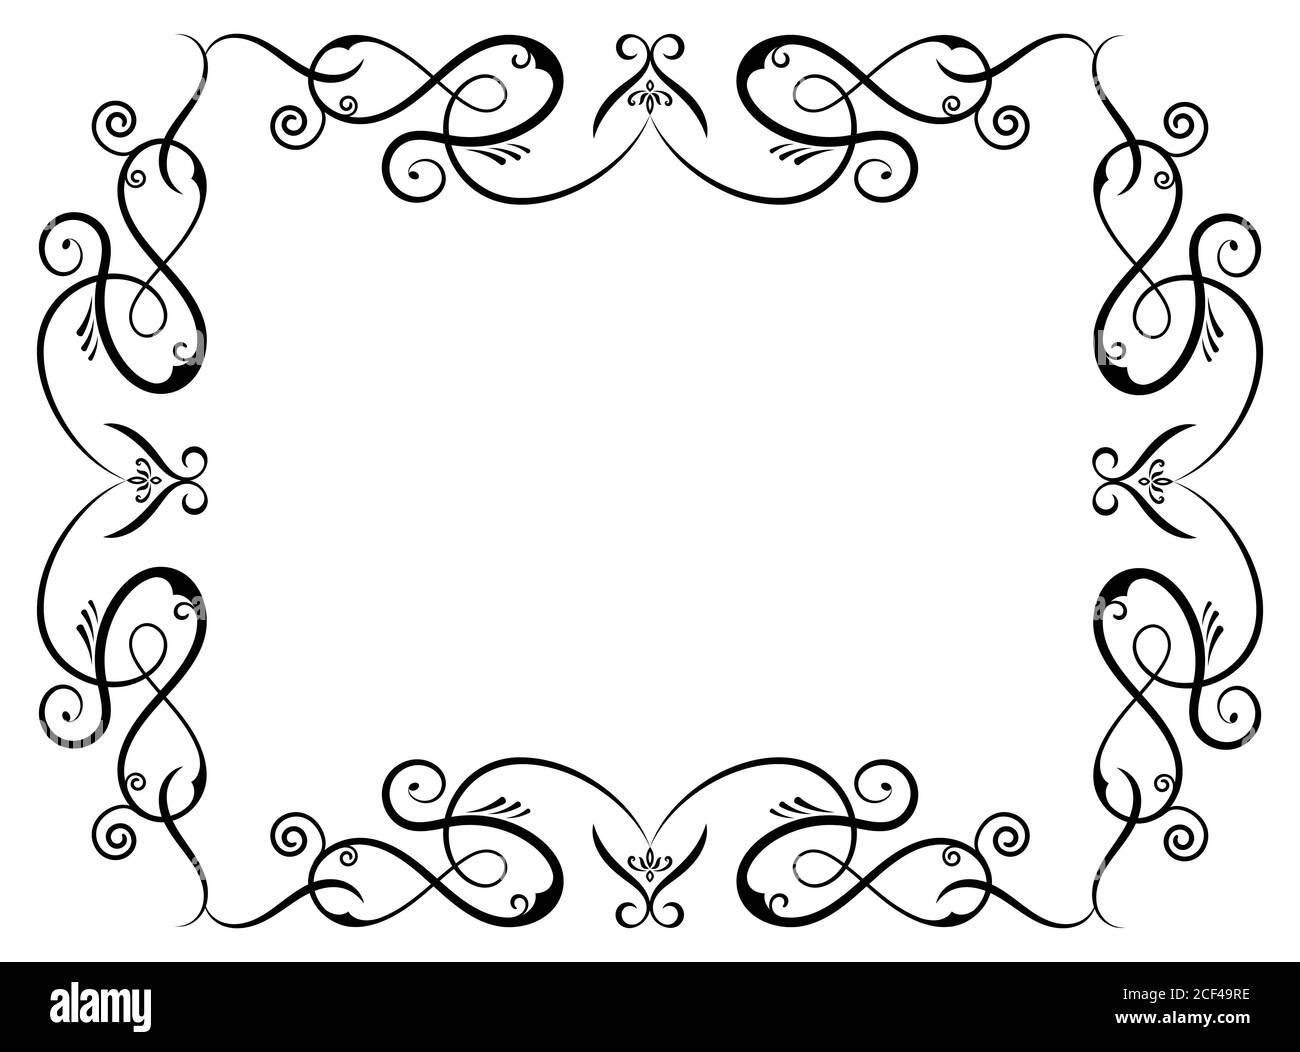 Simple Floral Border Design Black And White : Flower border design ...